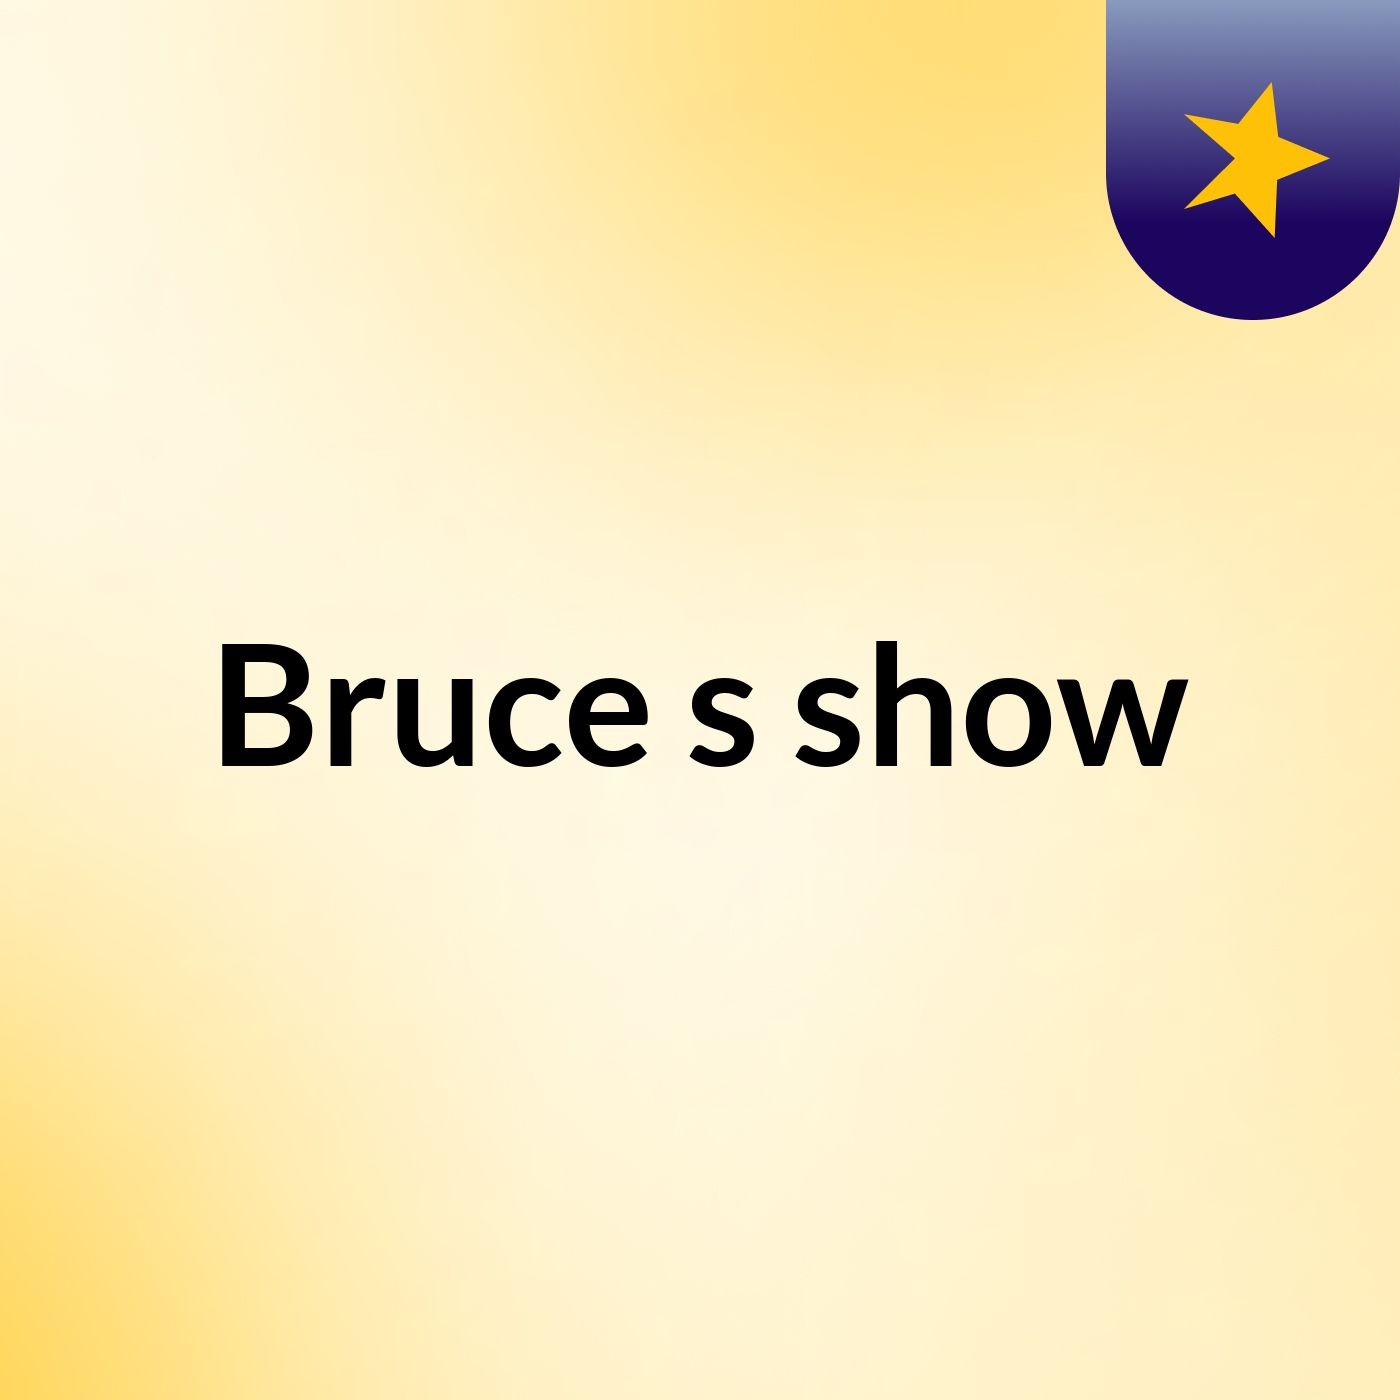 Bruce's show